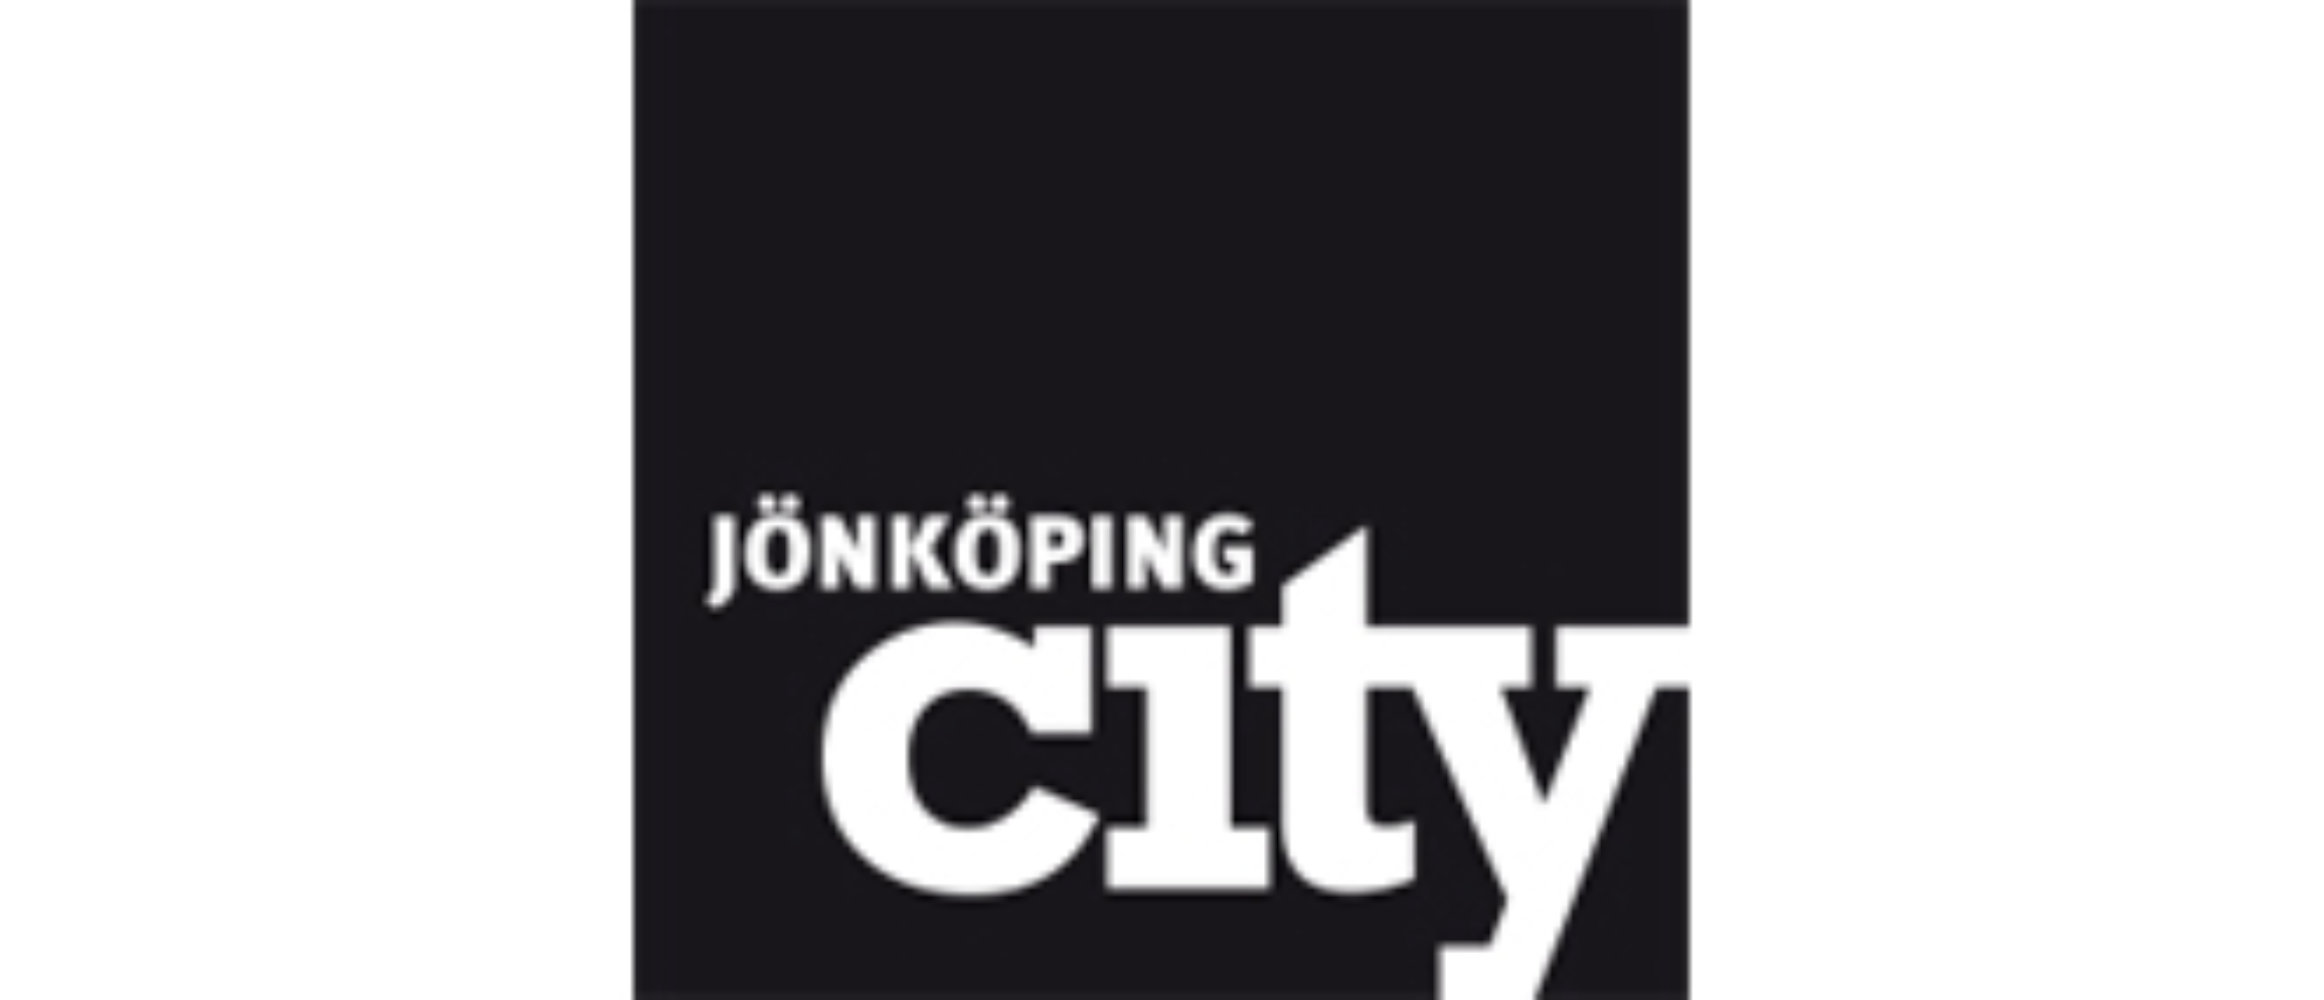 Jönköping City